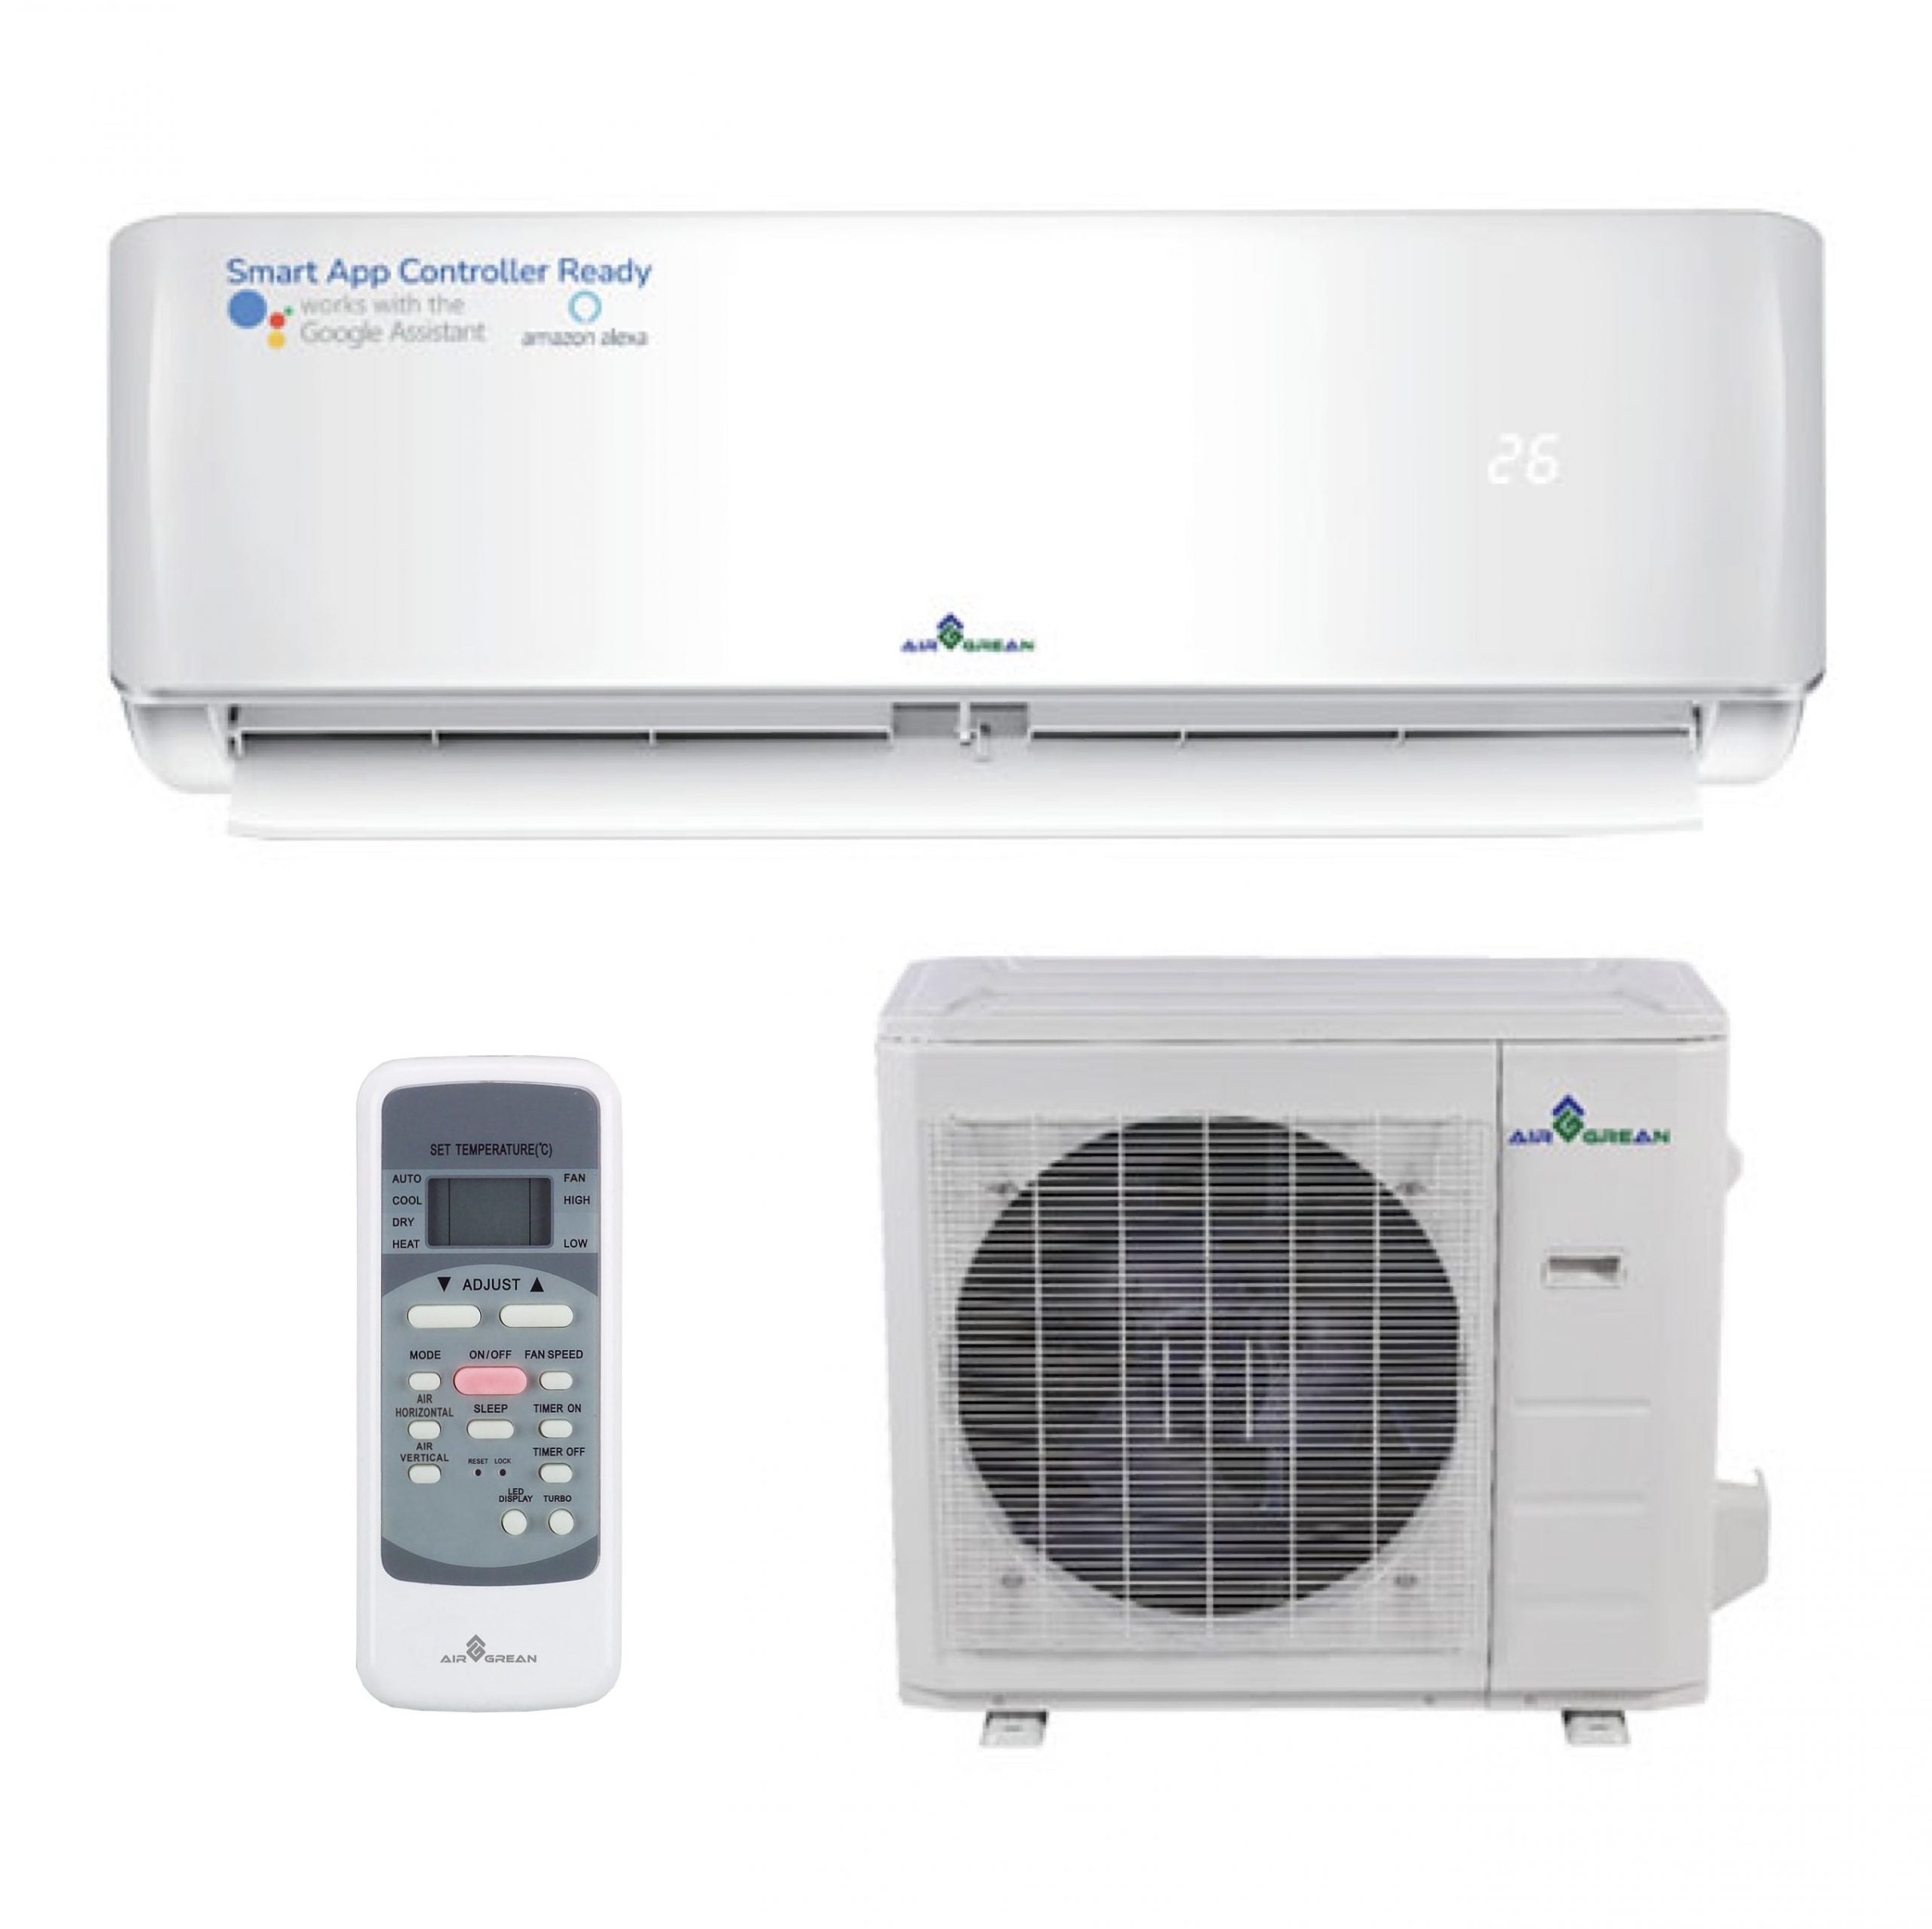 AirGrean Mini Split 3 TON or 36,000 BTU SEER 17 Heating & Cooling Air Conditioner